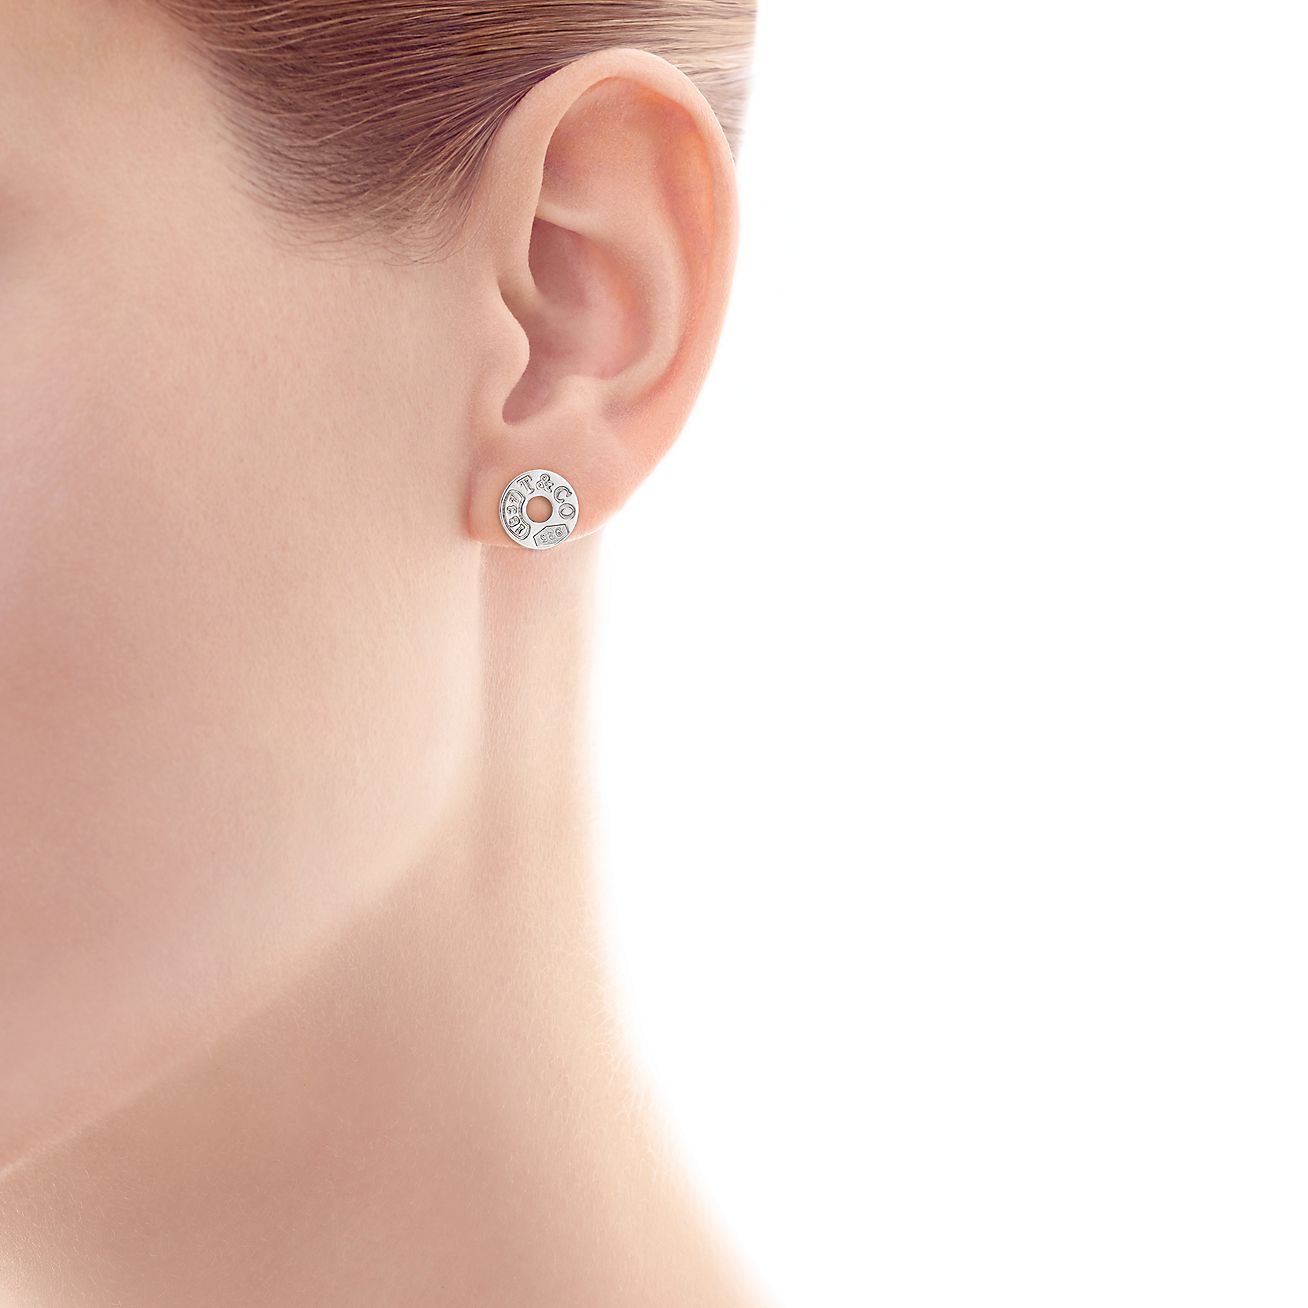 Tiffany 1837™ circle earrings in 